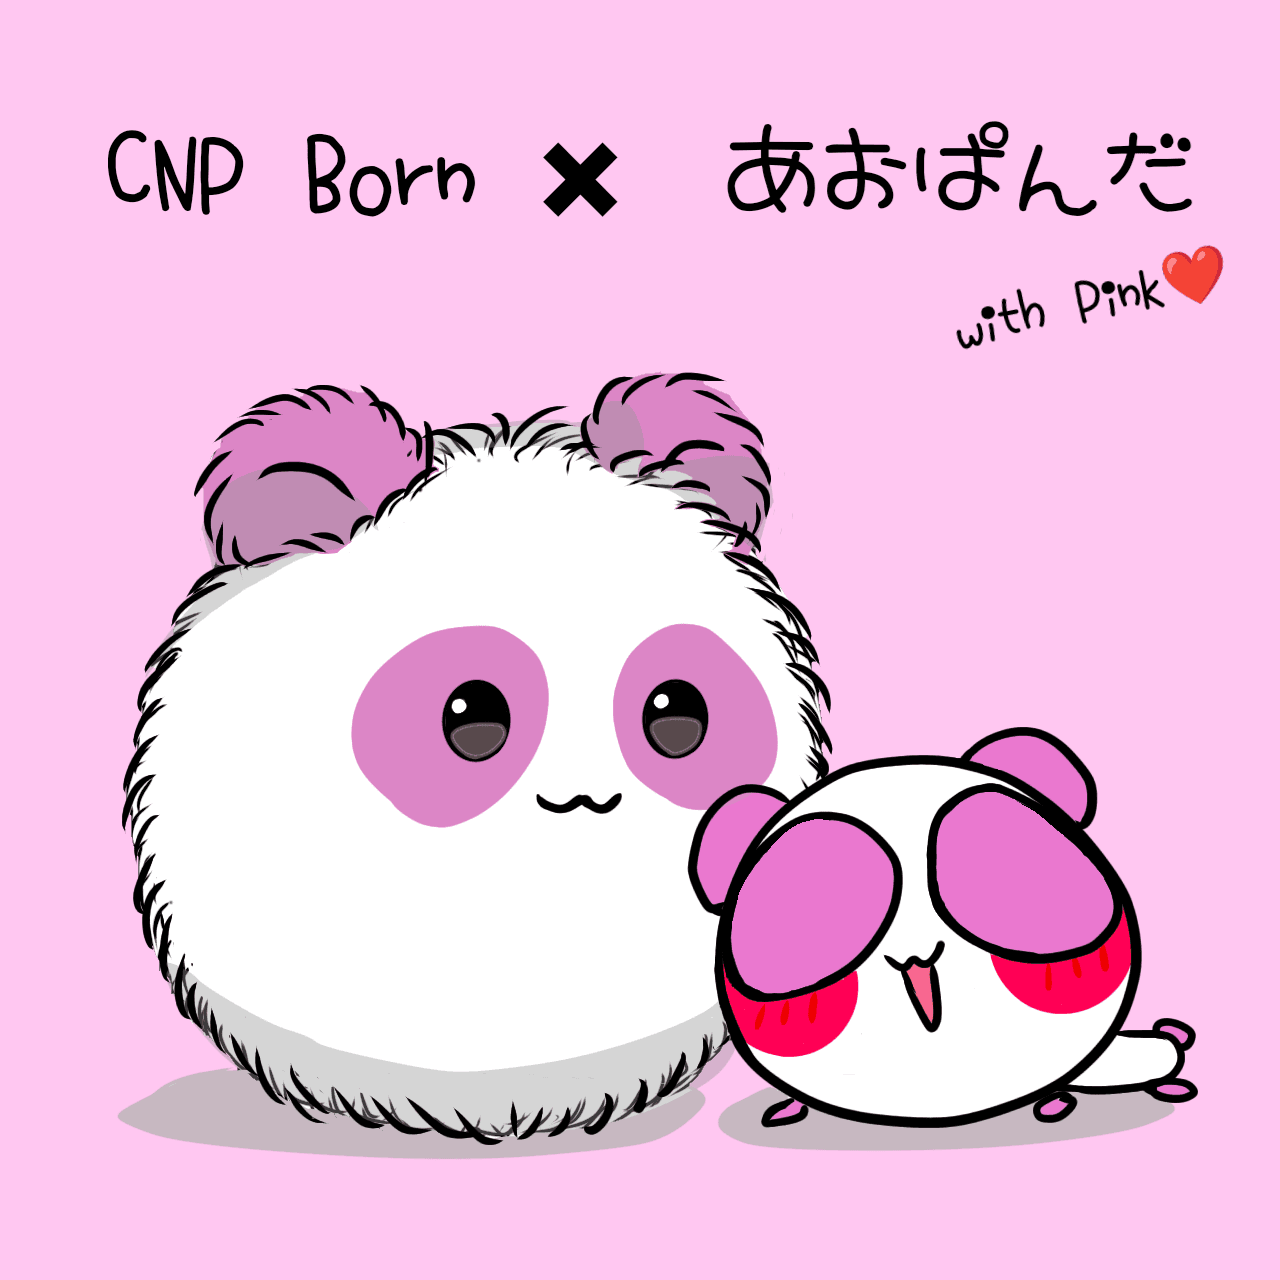 CNP Born x Aopanda